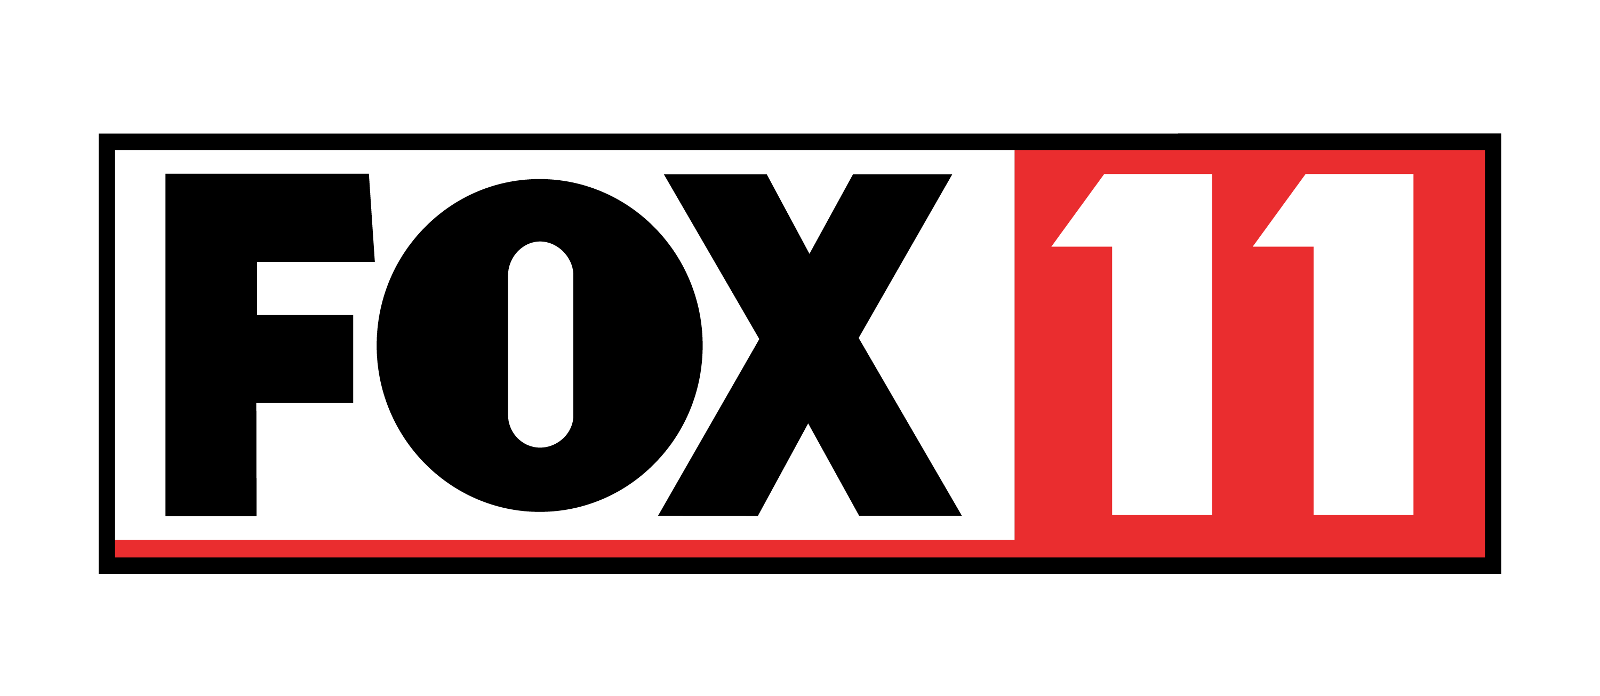 Fox 11 logo